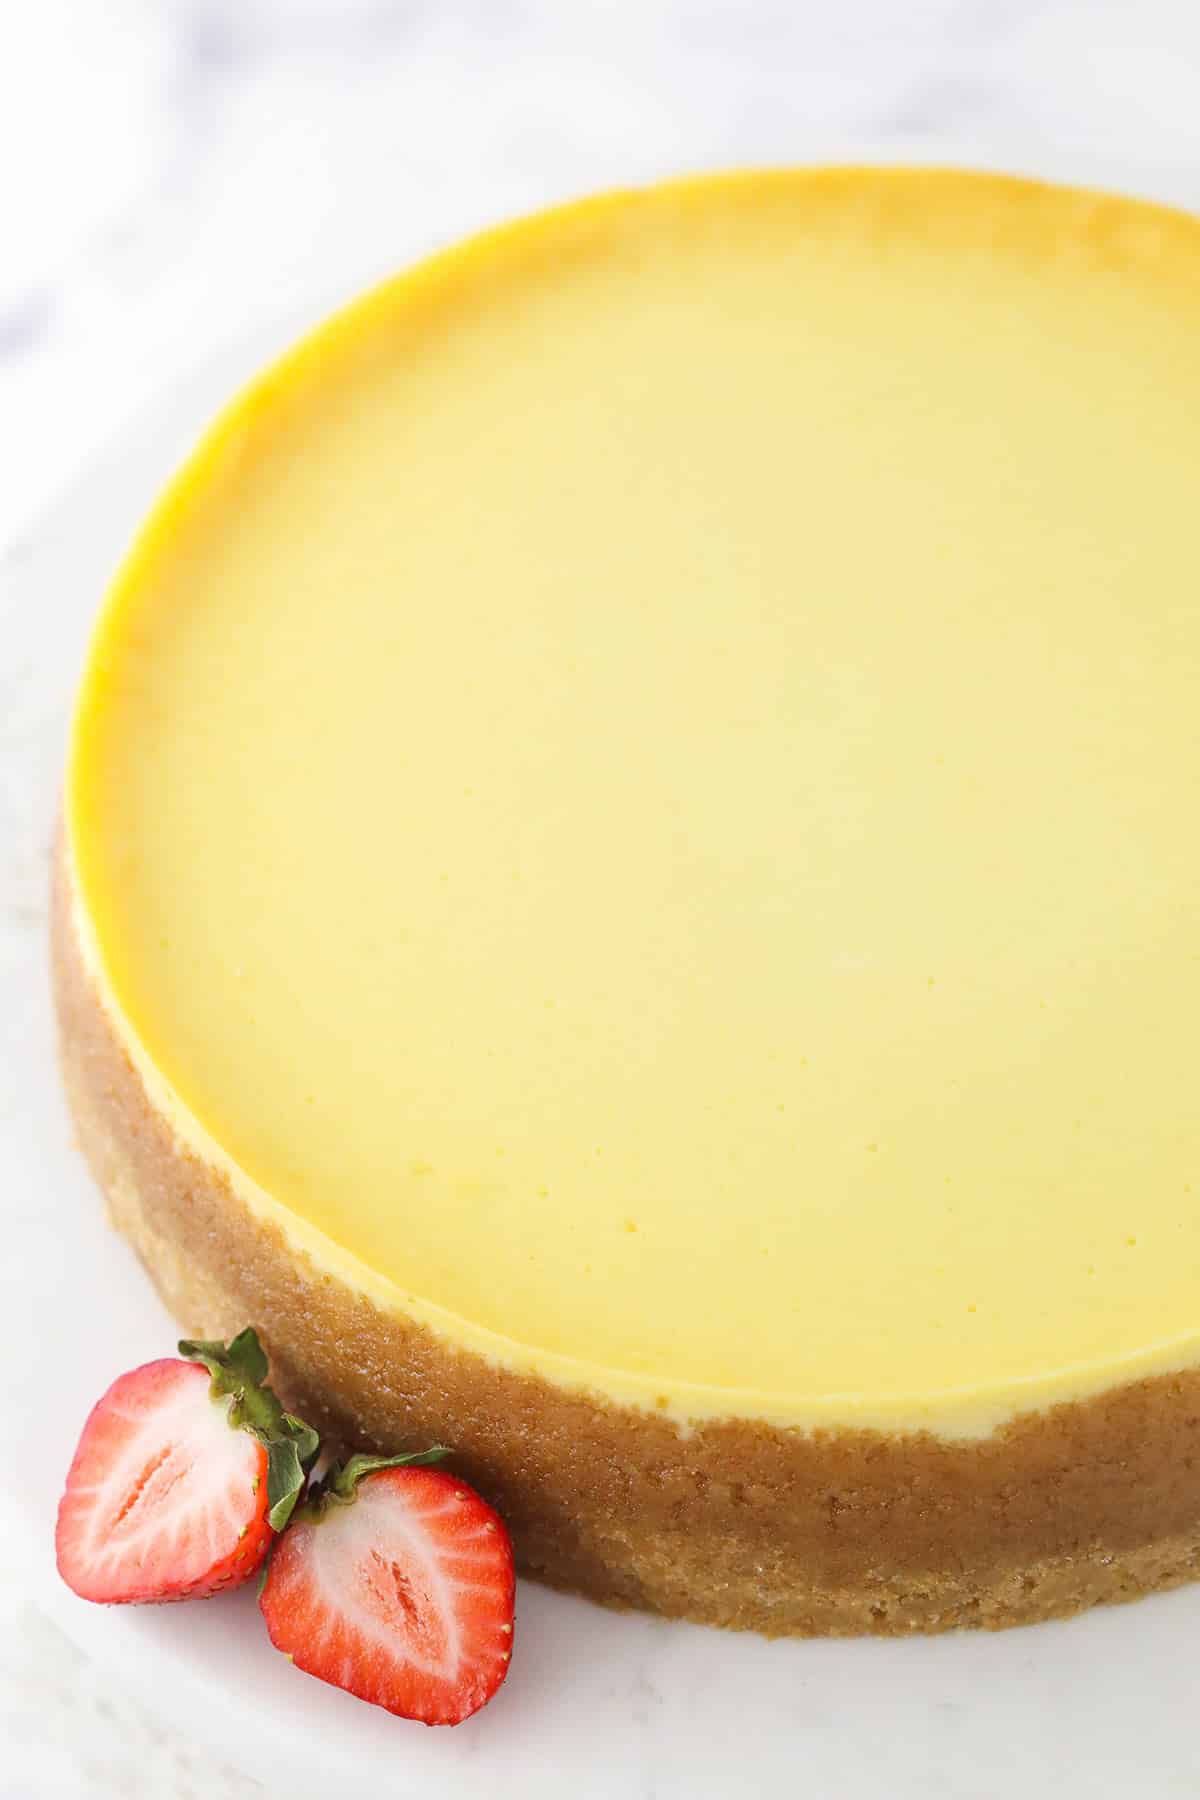 https://www.lifeloveandsugar.com/wp-content/uploads/2019/03/Classic-Vanilla-Cheesecake1.jpg